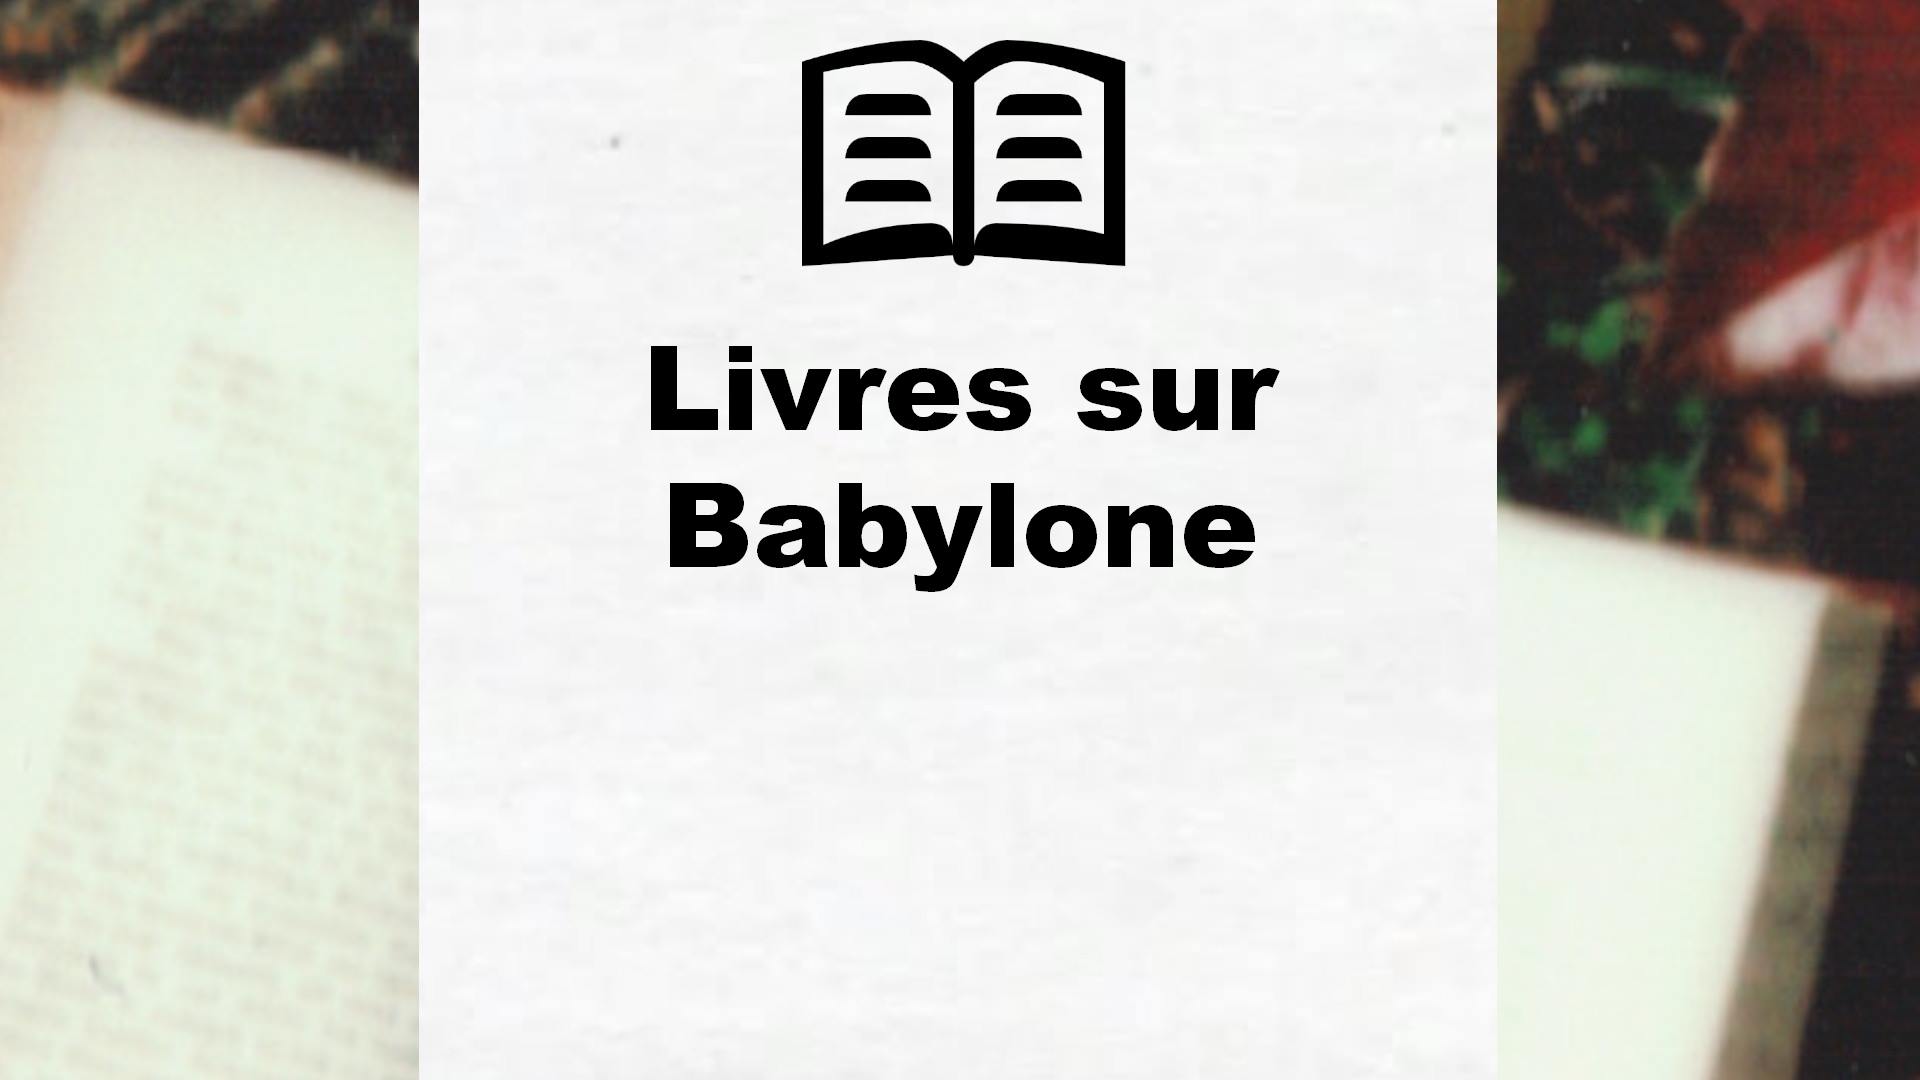 Livres sur Babylone